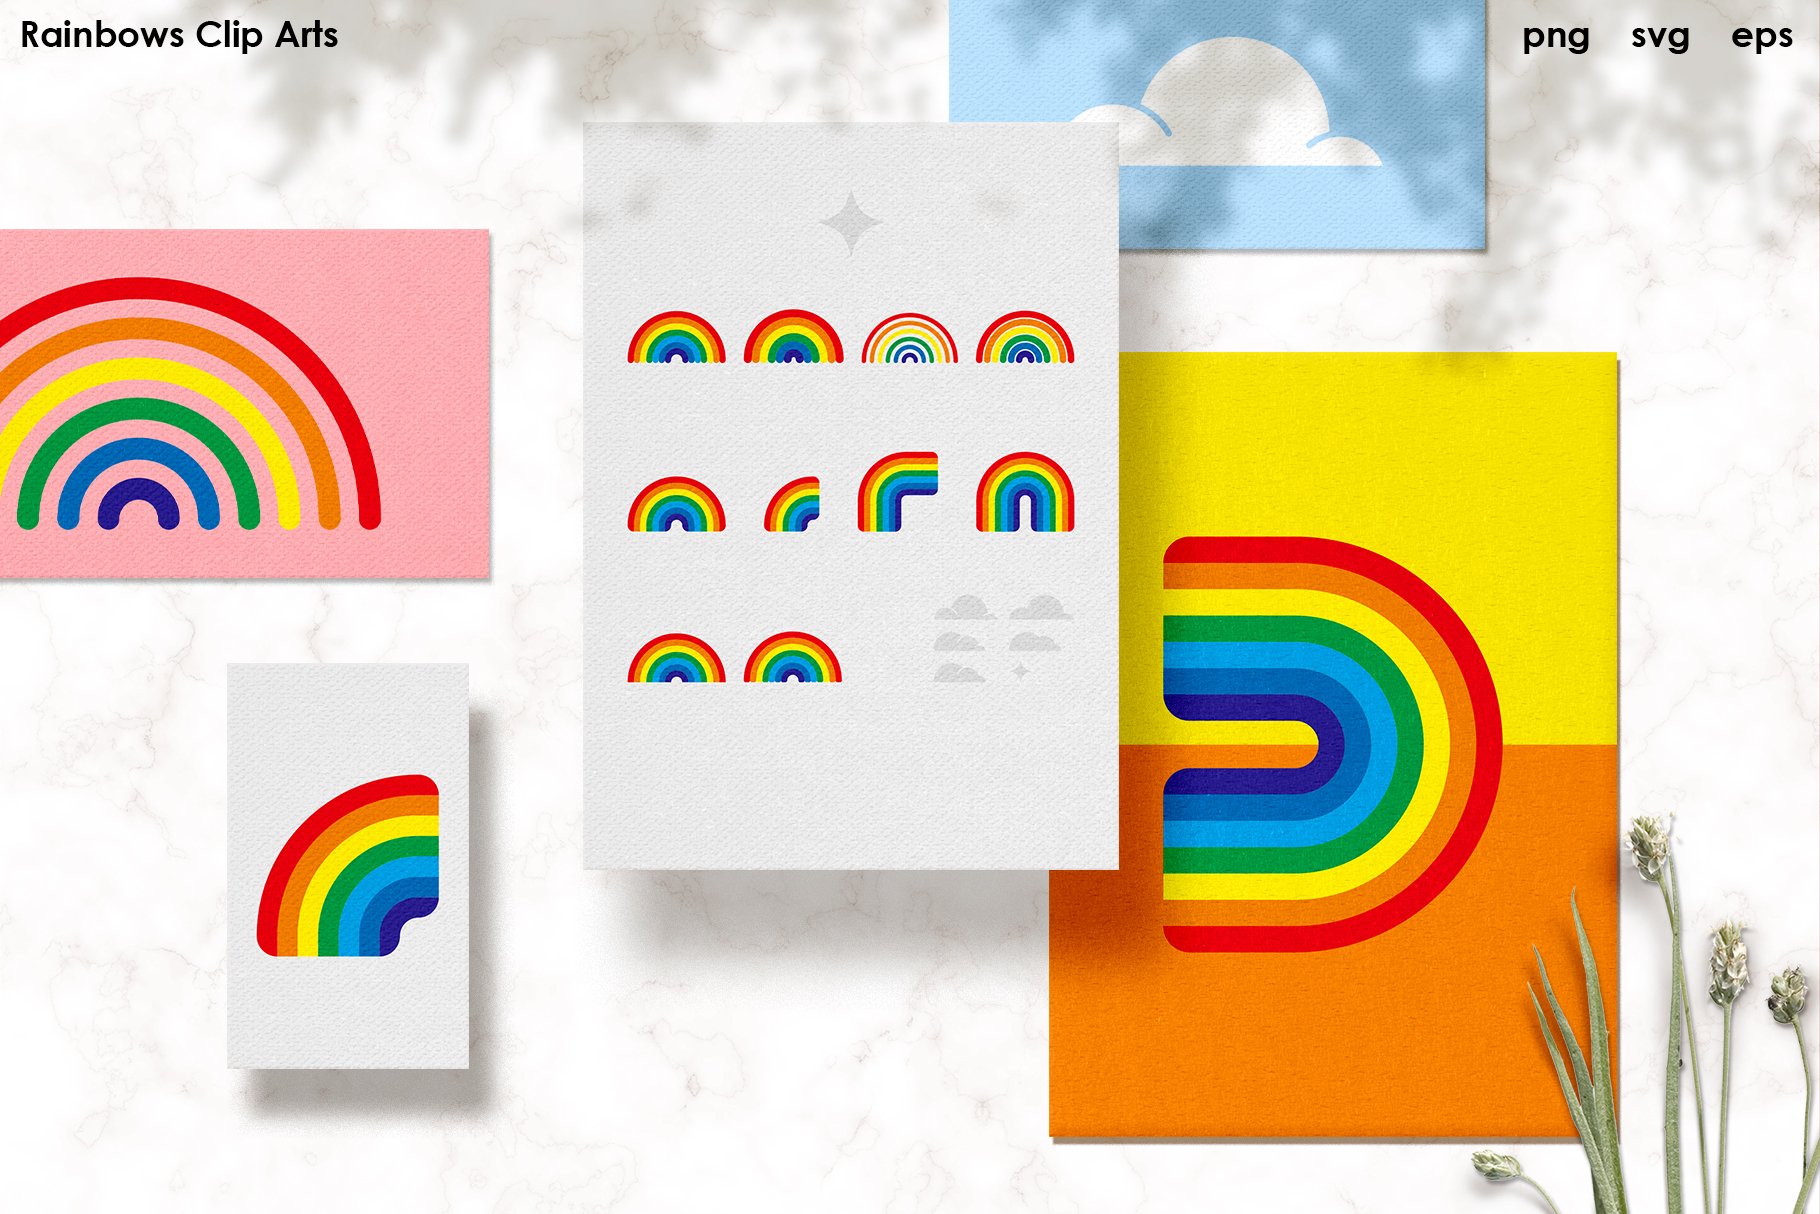 Rainbows Clip Arts - PNG, SVG, EPS cover image.